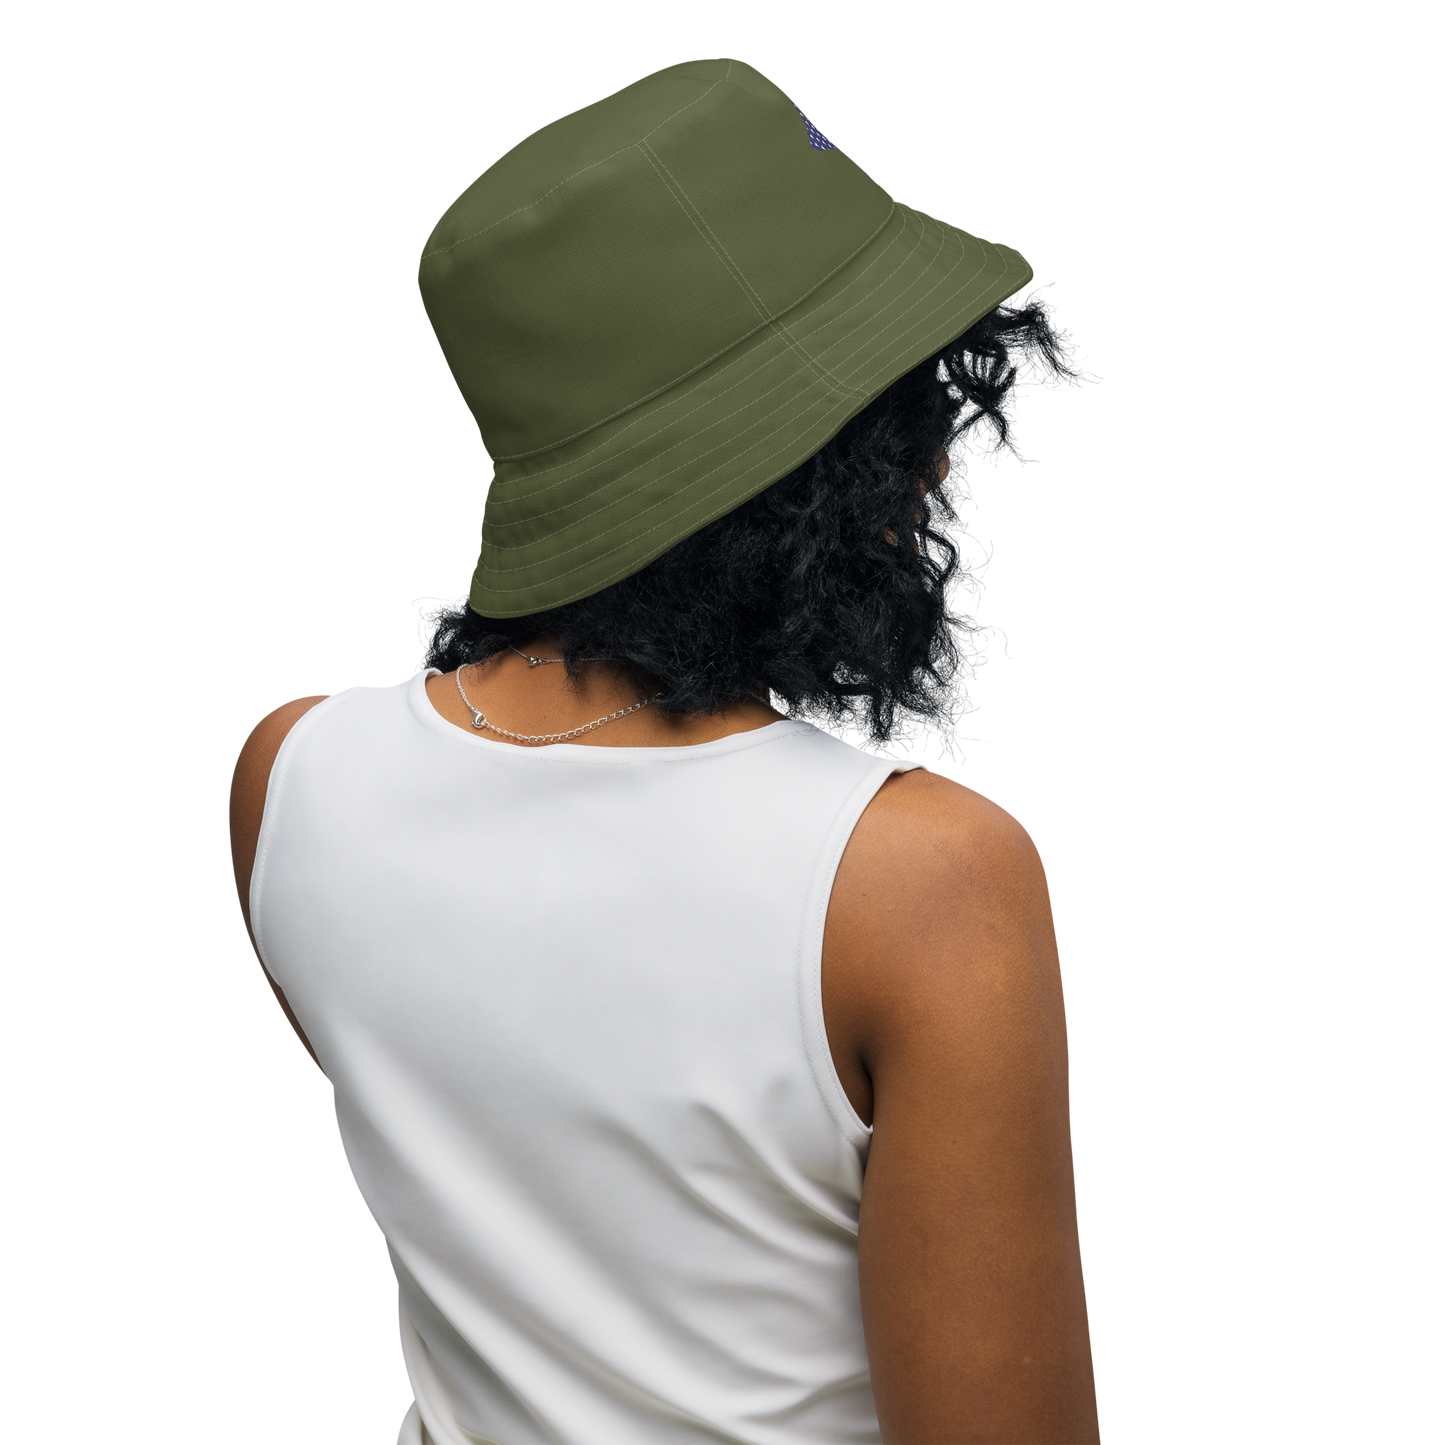 Michigan Upper Peninsula Bucket Hat (Patriot Edition) | Reversible - Army Green